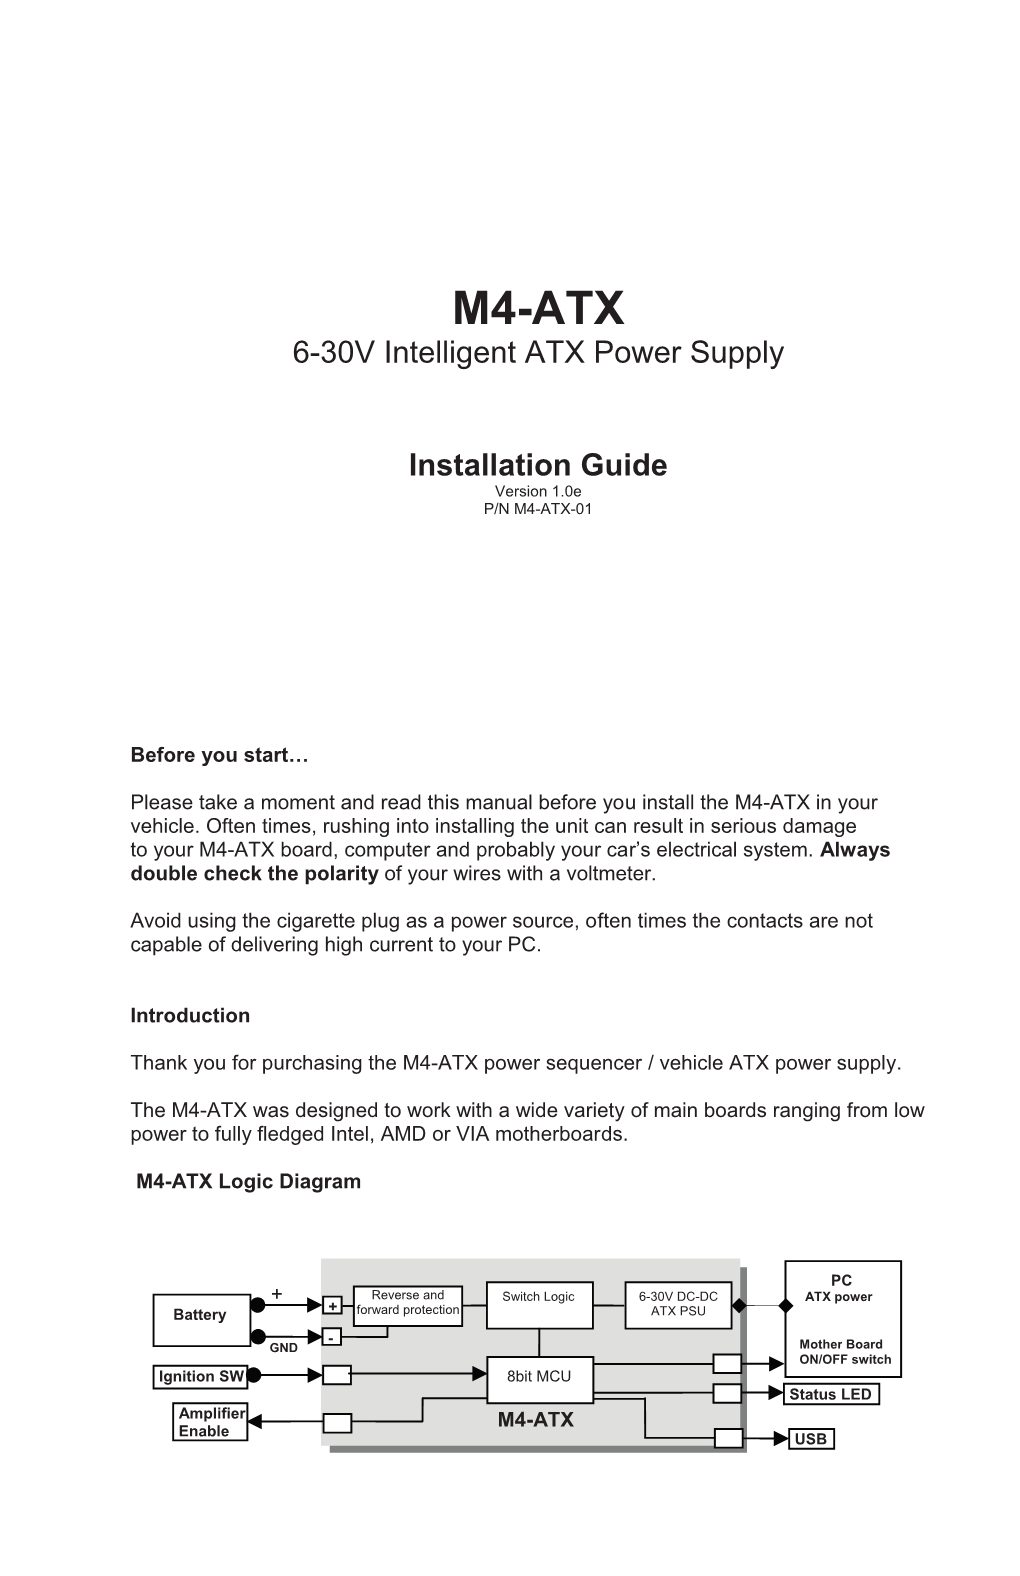 M4-ATX 6-30V Intelligent ATX Power Supply